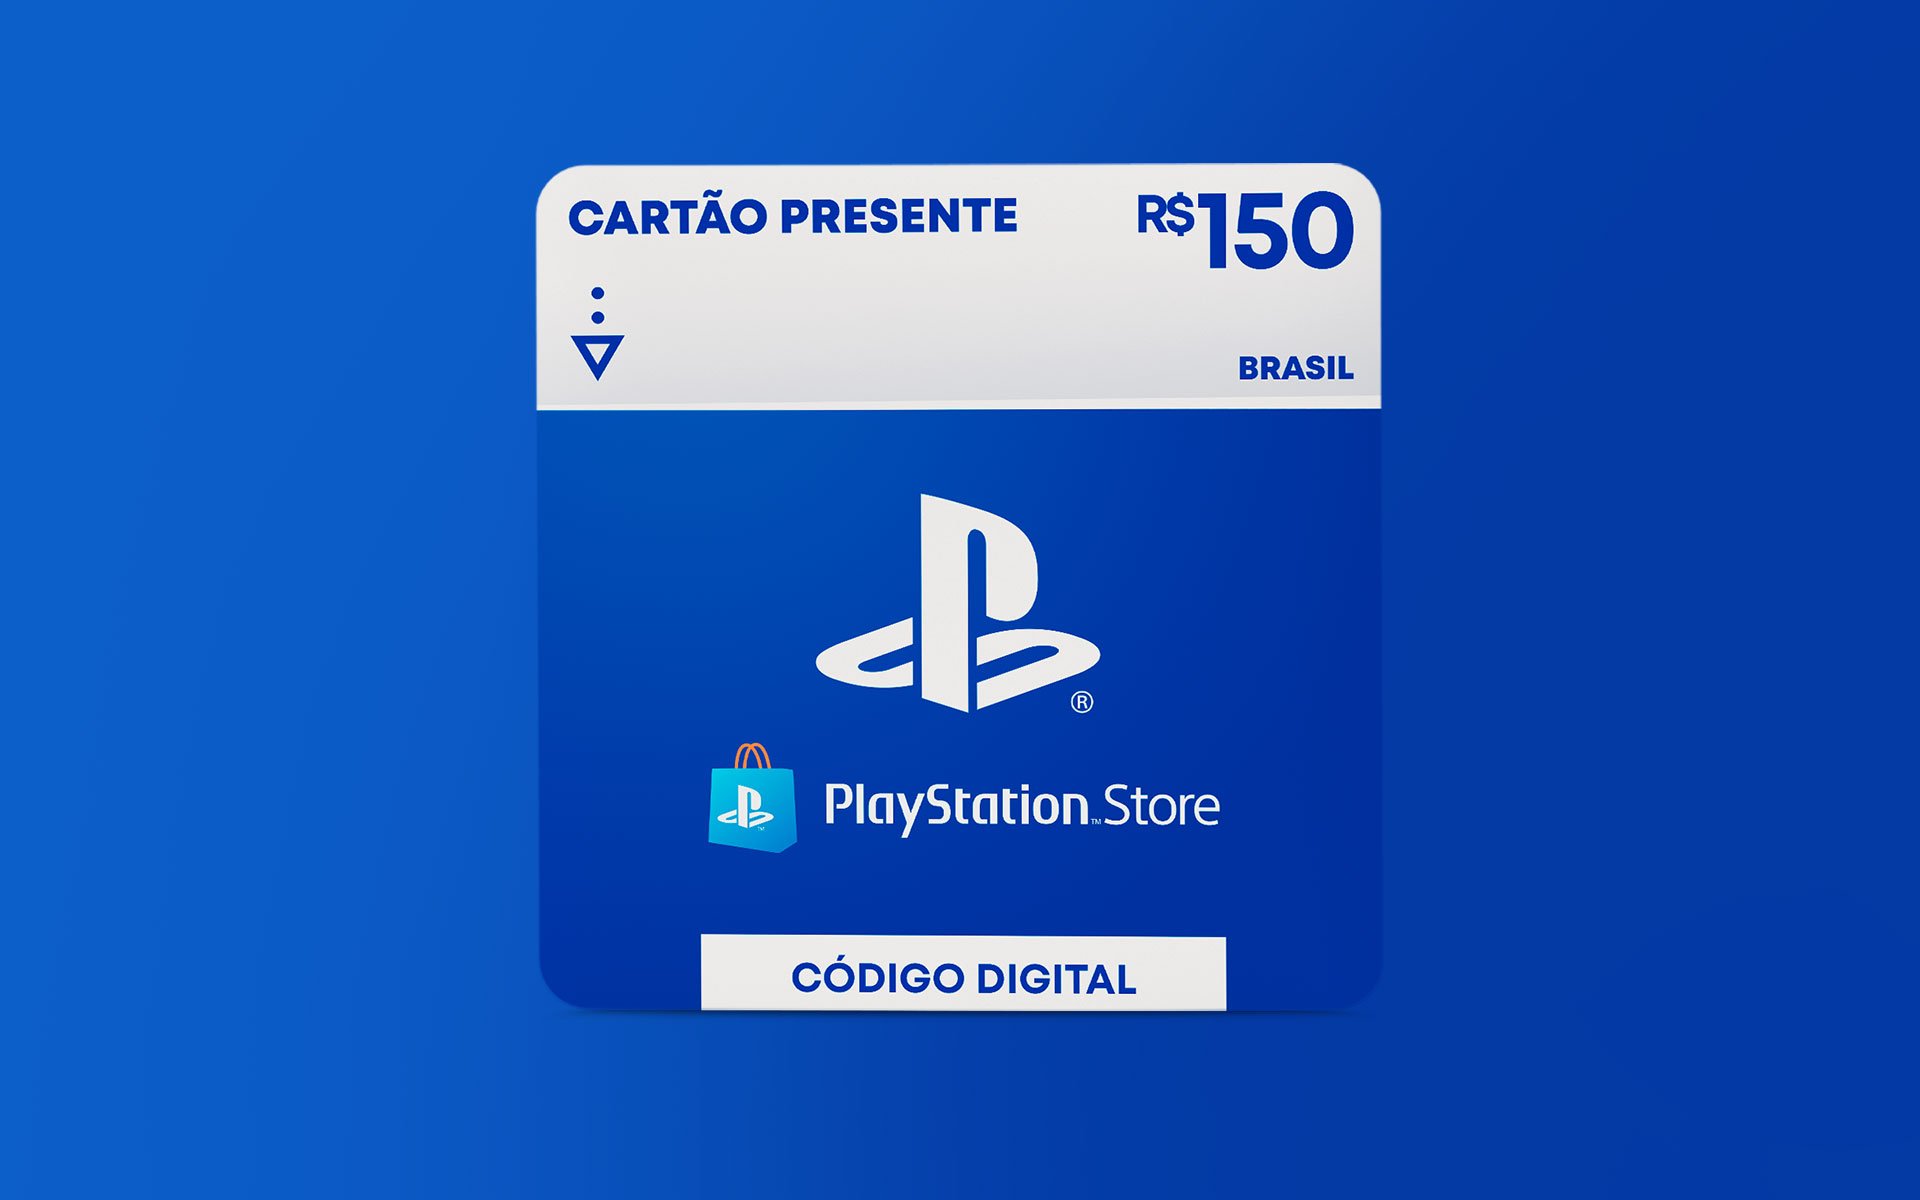 R$150 PlayStation Store - Cartão Presente Digital [Exclusivo Brasil]